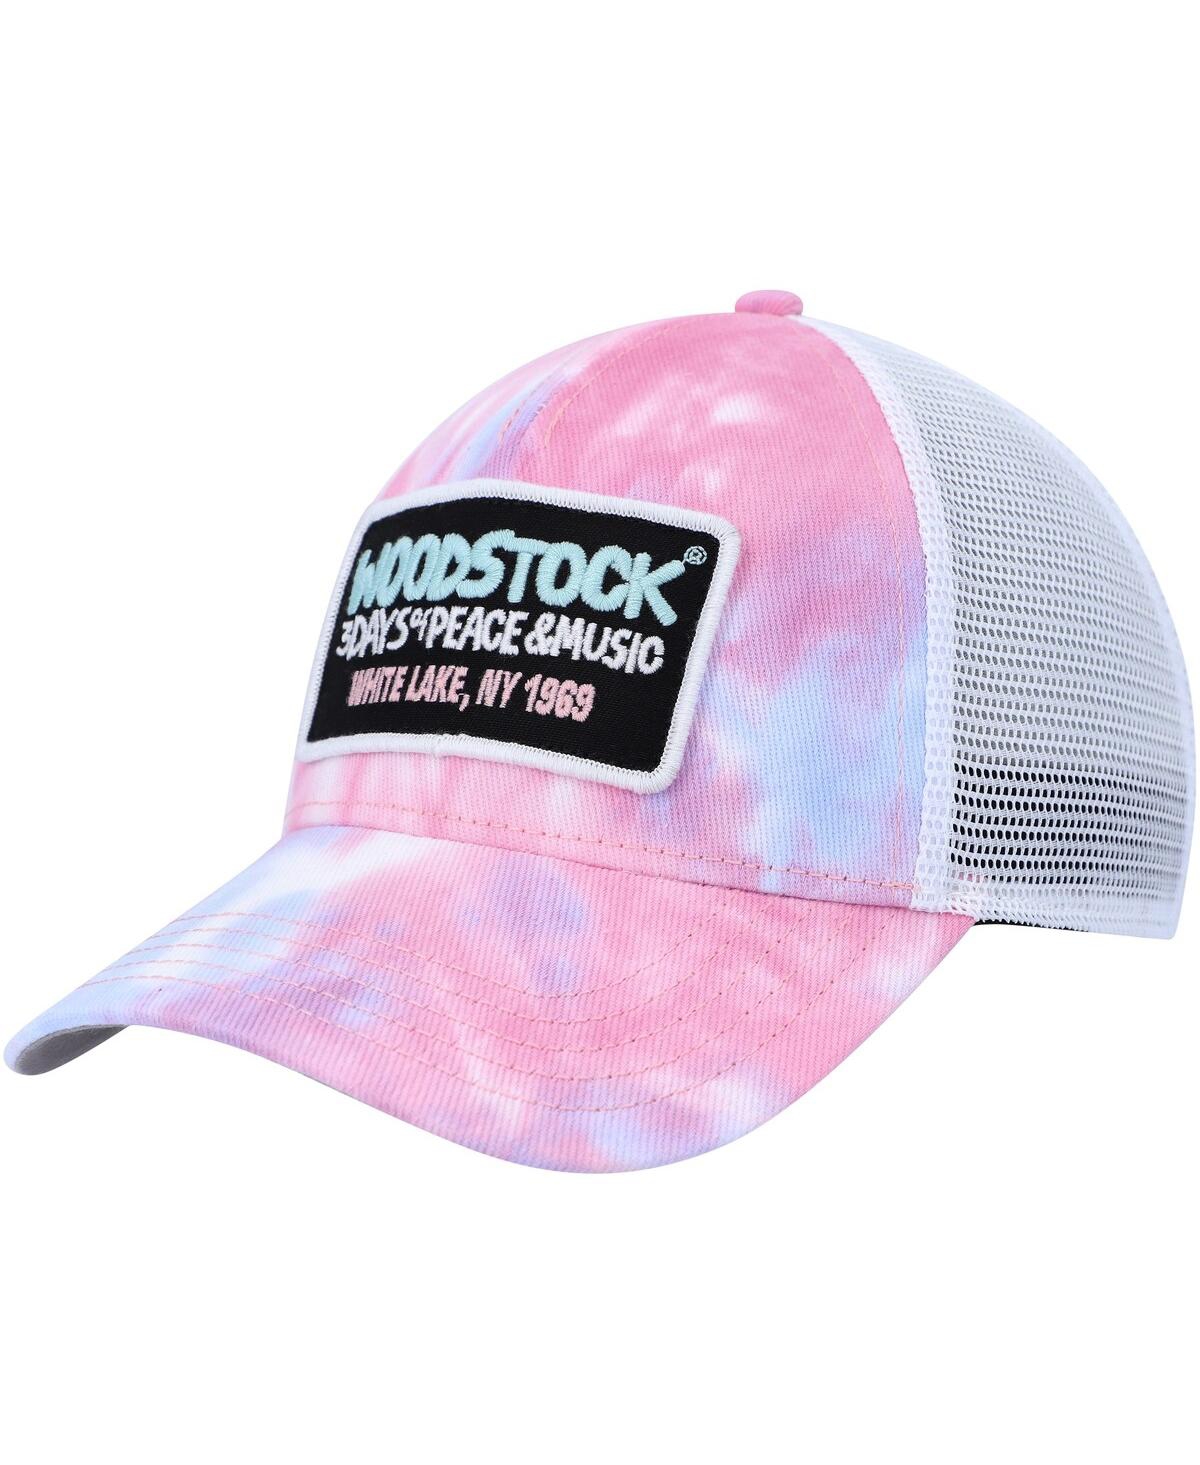 Men's American Needle Pink, White Woodstock Valin Trucker Snapback Hat - Pink, White